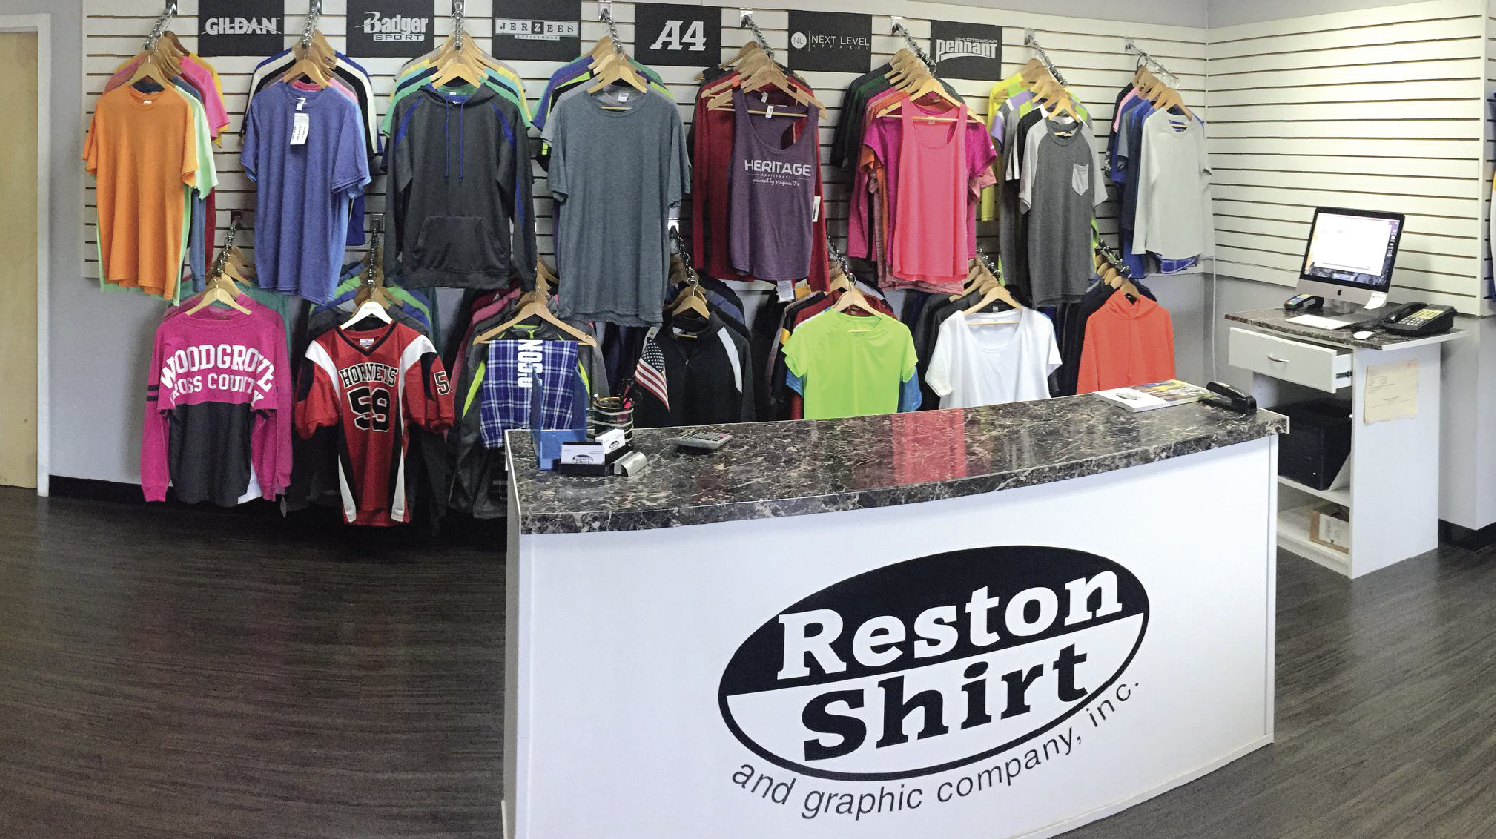 Reston Shirt & Graphic Co